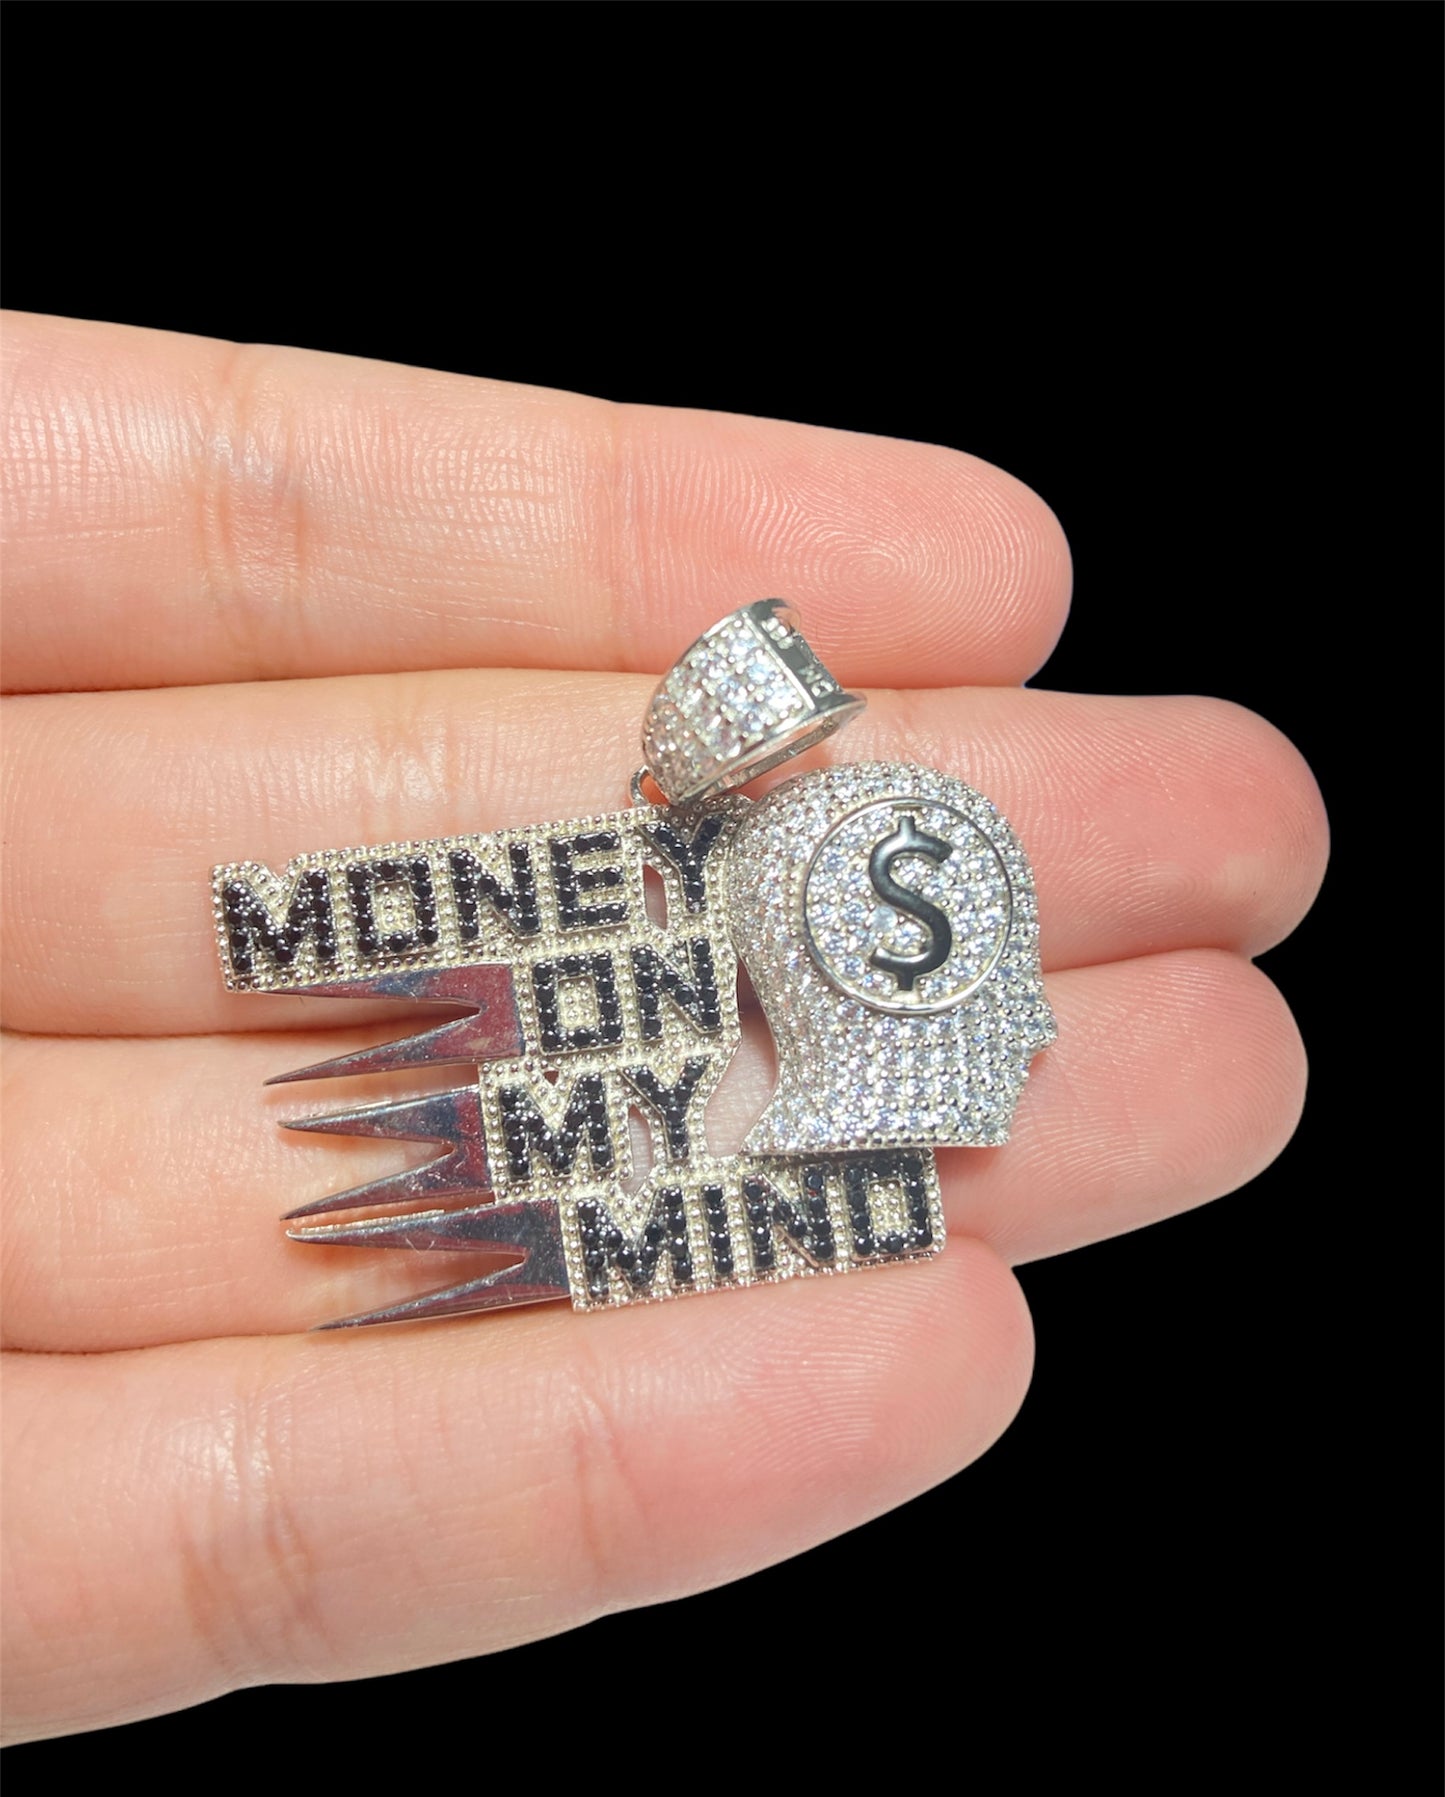 Pendant “MONEY ON MY MIND”